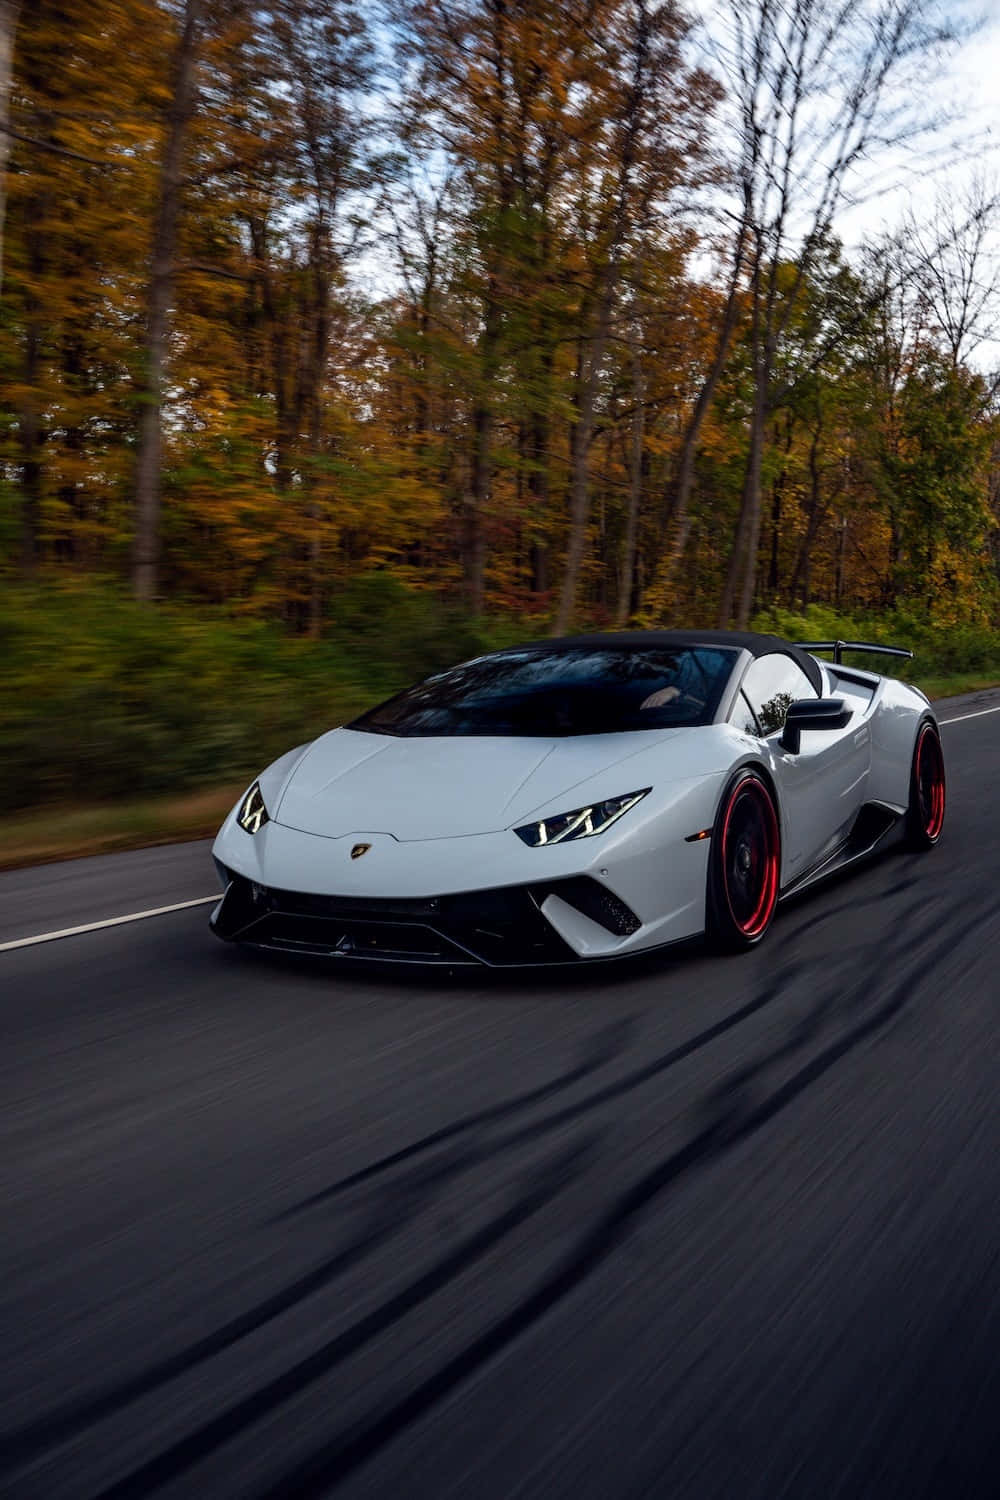 Caption: "elegance In Motion - Lamborghini Supercar"